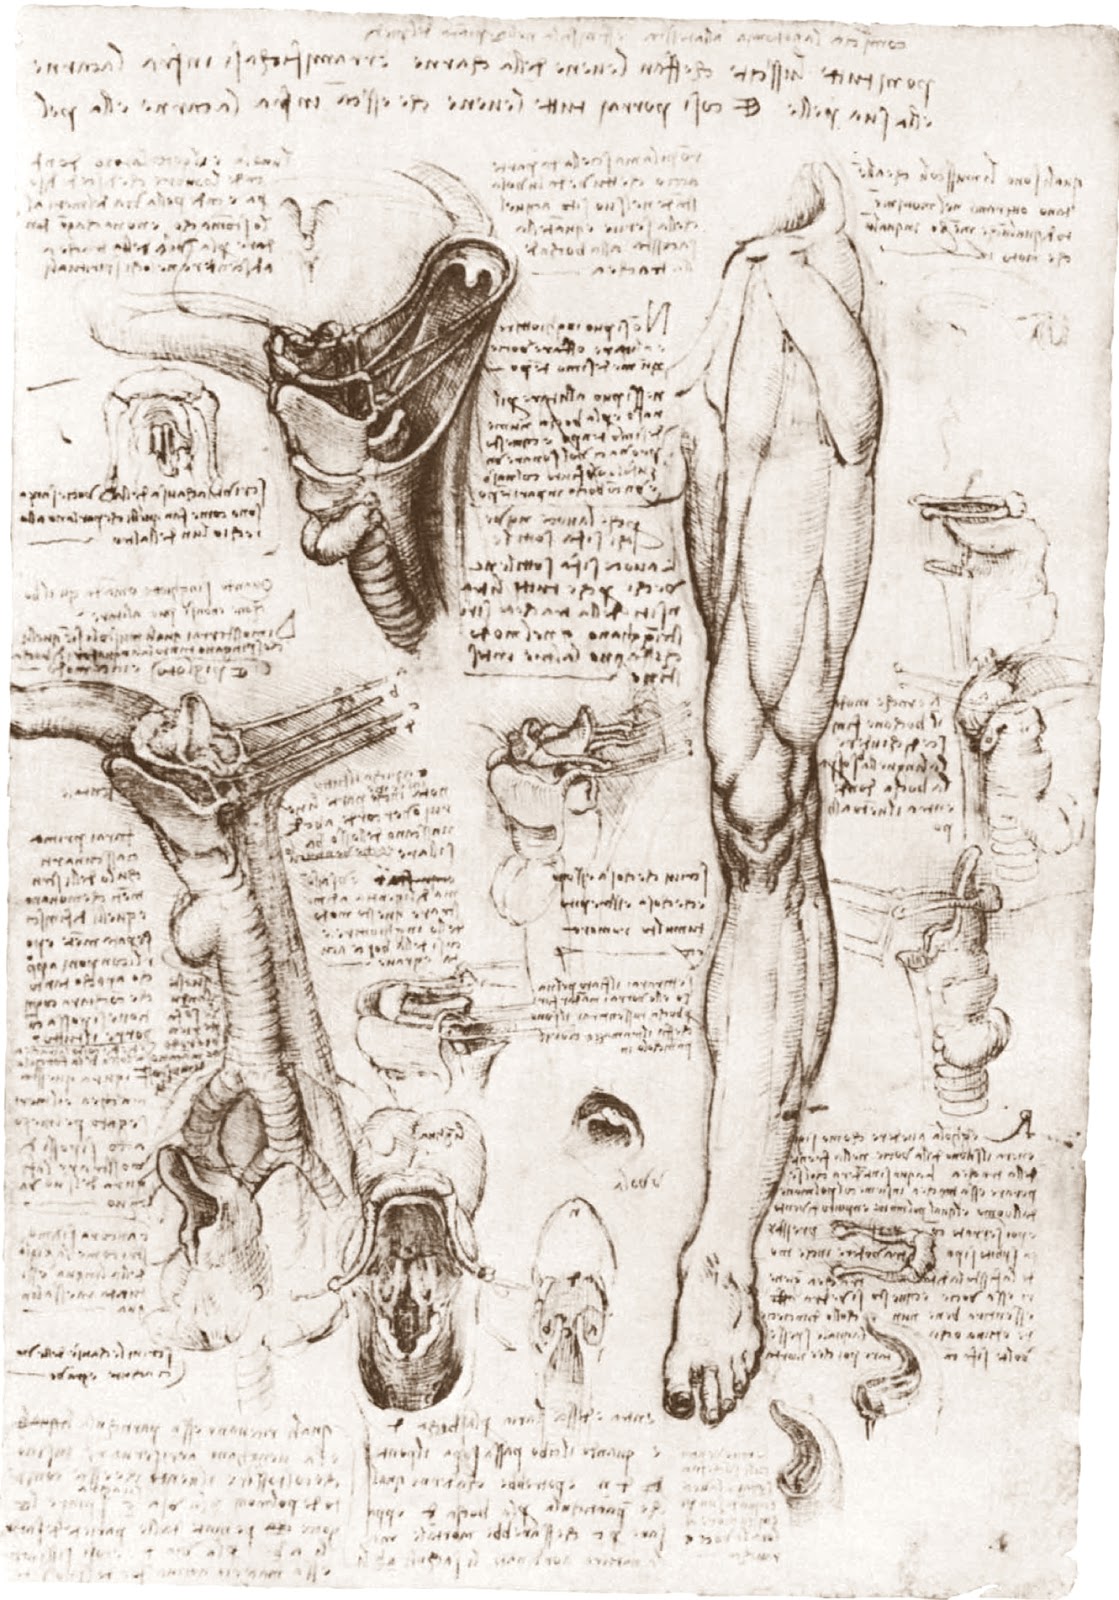 Leonardo+da+Vinci-1452-1519 (797).jpg